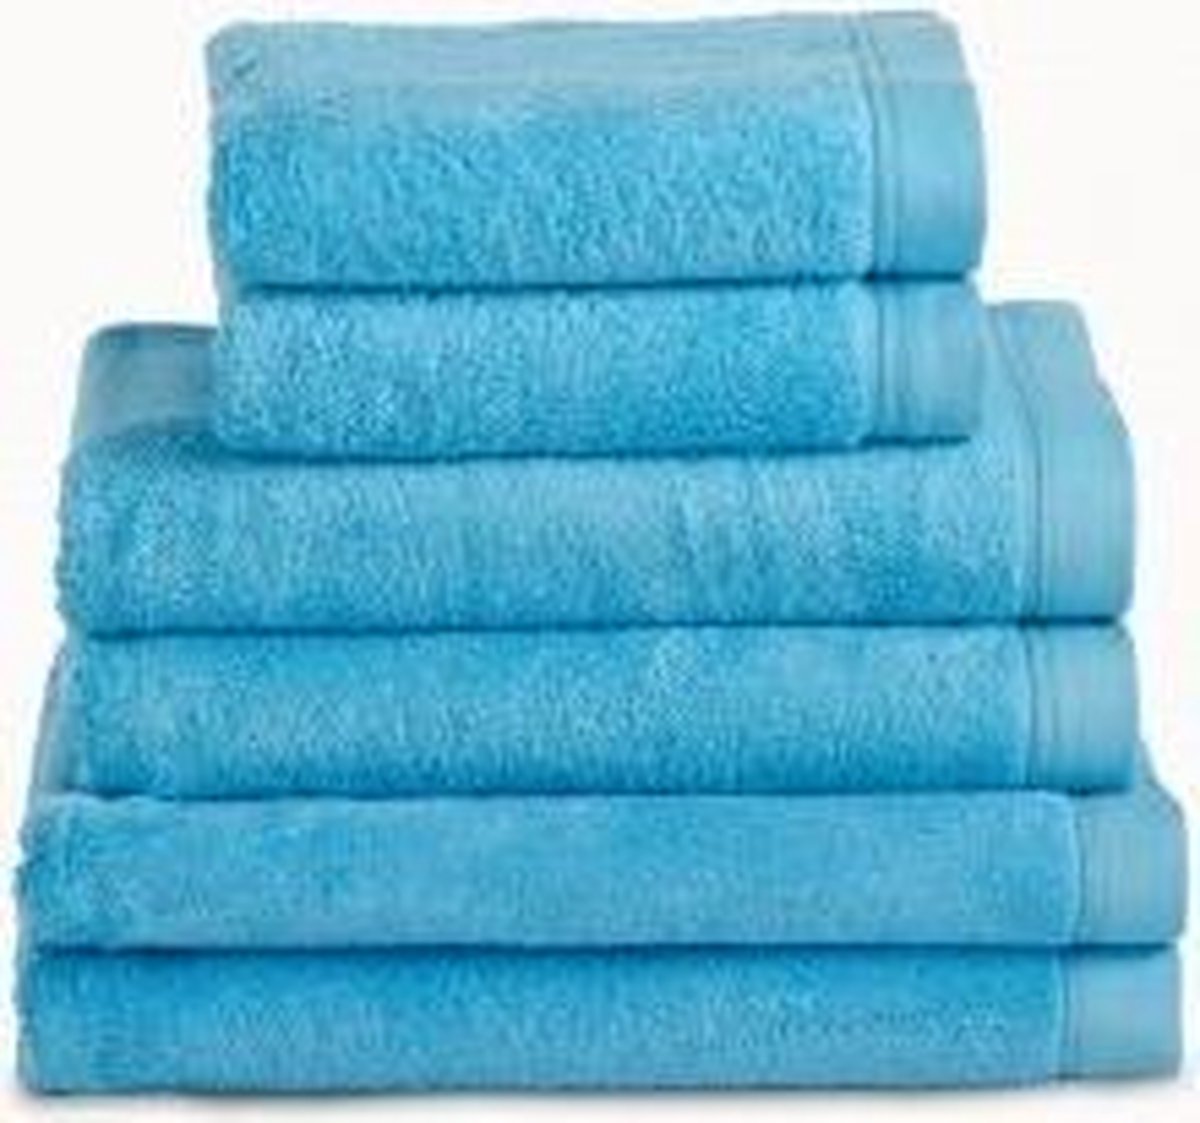 Handdoek 50x100 cm Uni Imperial Luxury Hotelkwaliteit Turquoise Aqua